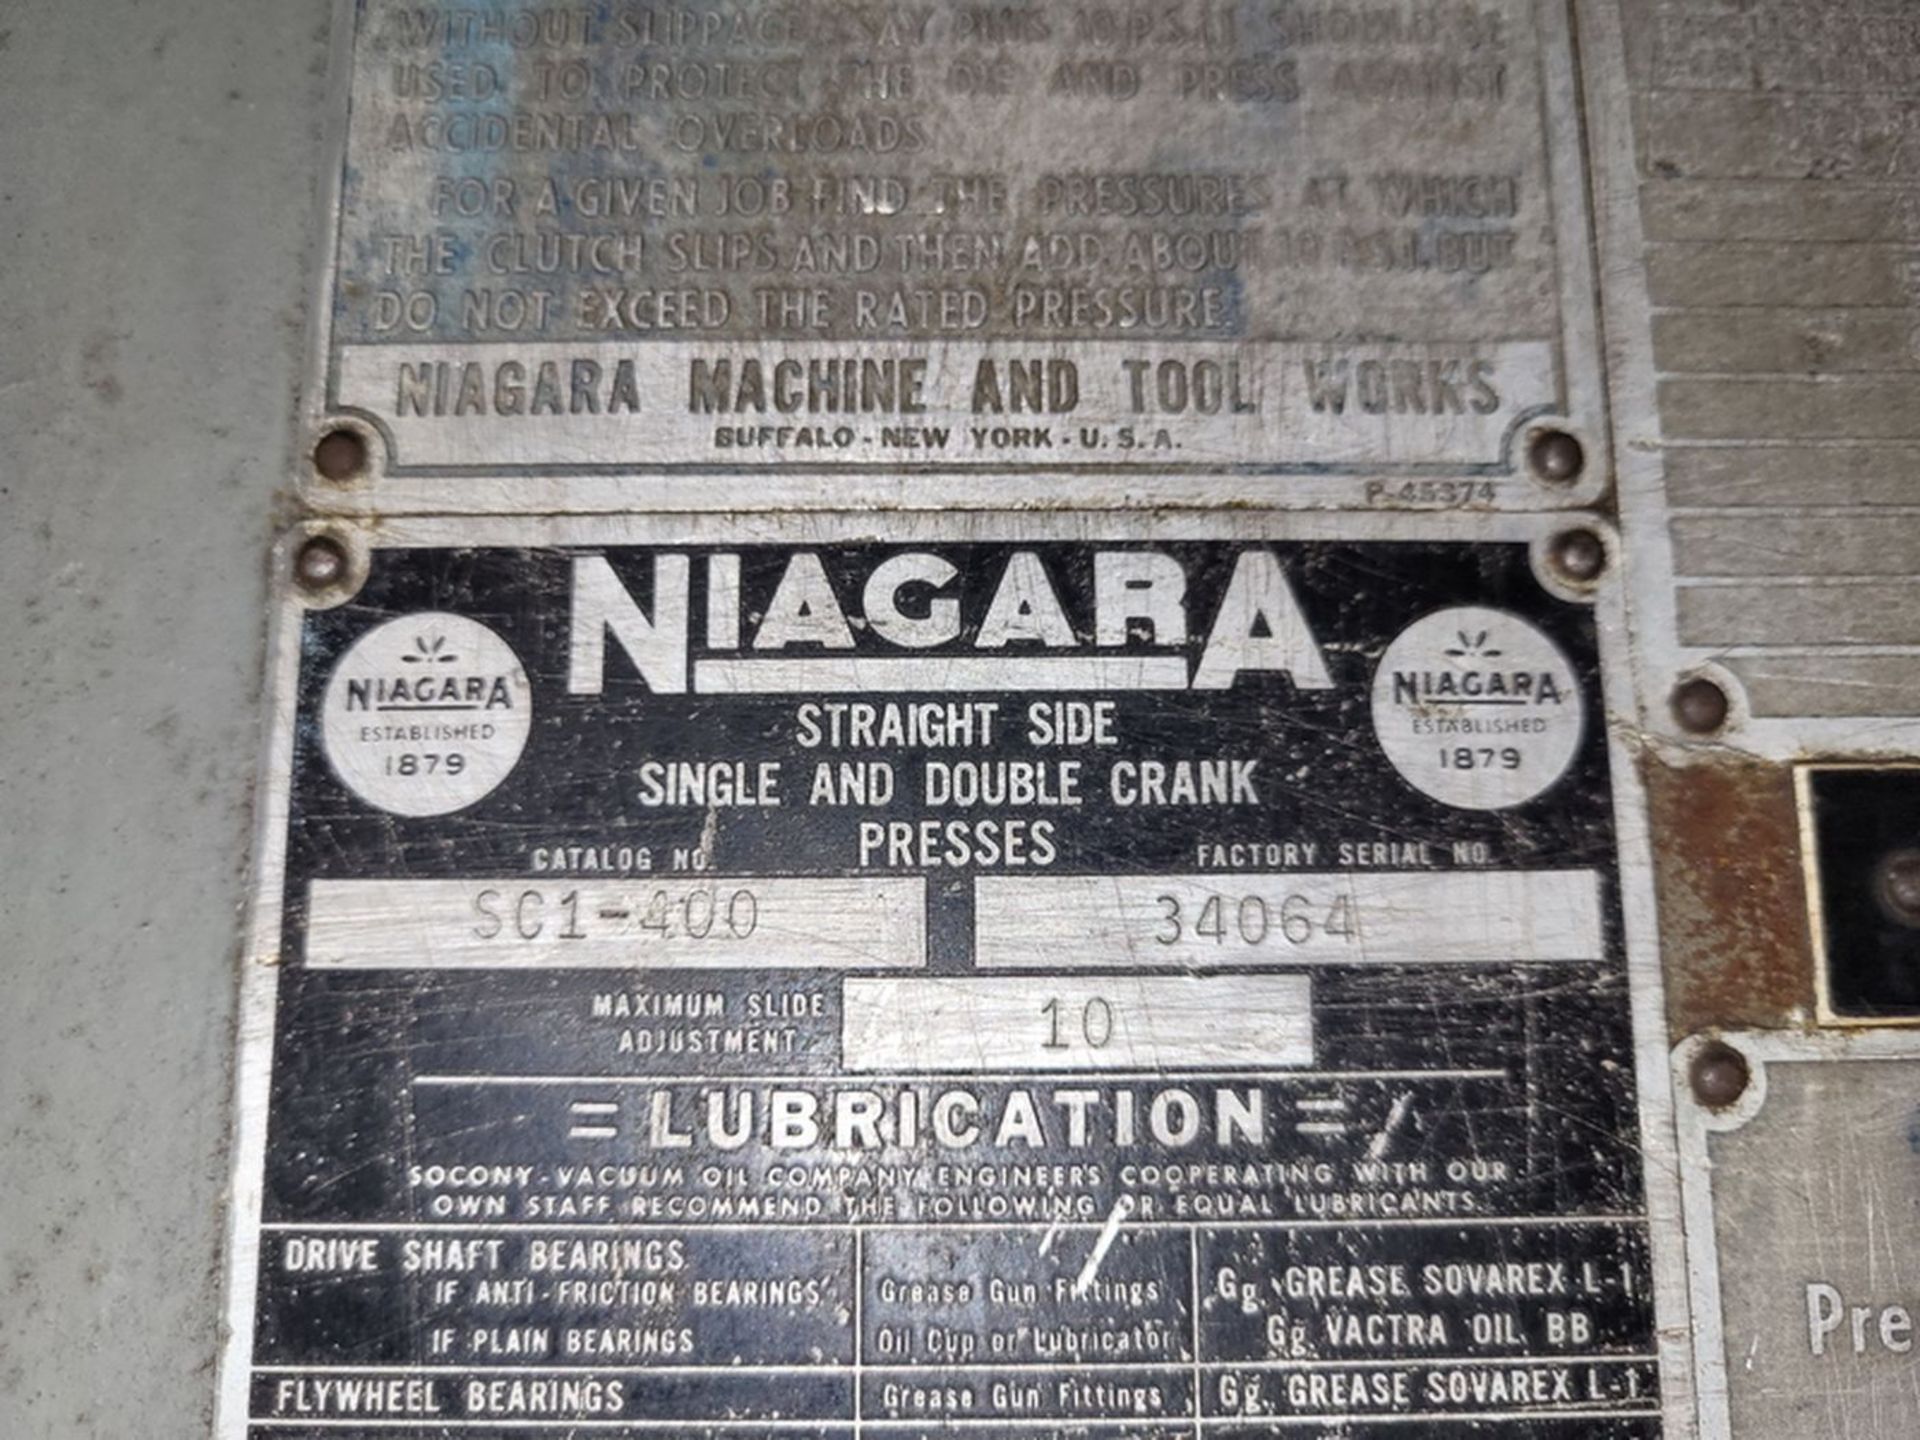 Niagara 400-Ton Cap. SCI-400-36-42 Straight Side Press, SN: 34064, Air Clutch, 10 in. Stroke: - Image 9 of 13